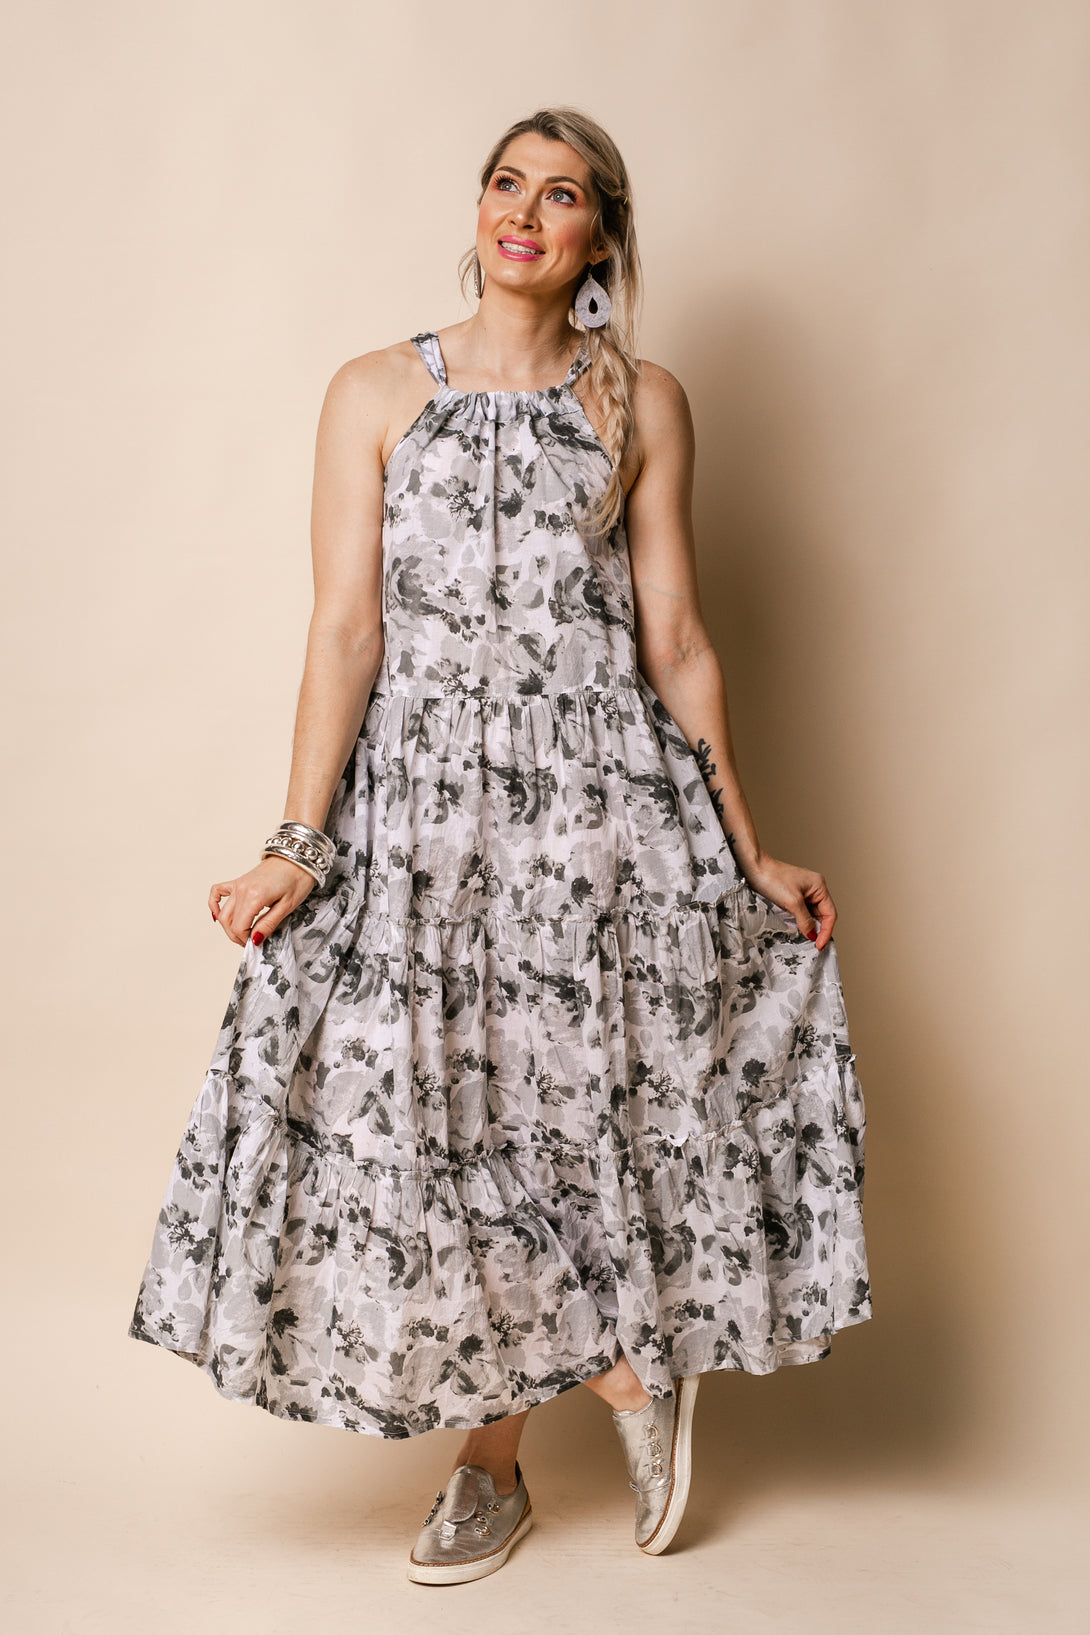 Murphy Cotton Dress in Granite - Imagine Fashion